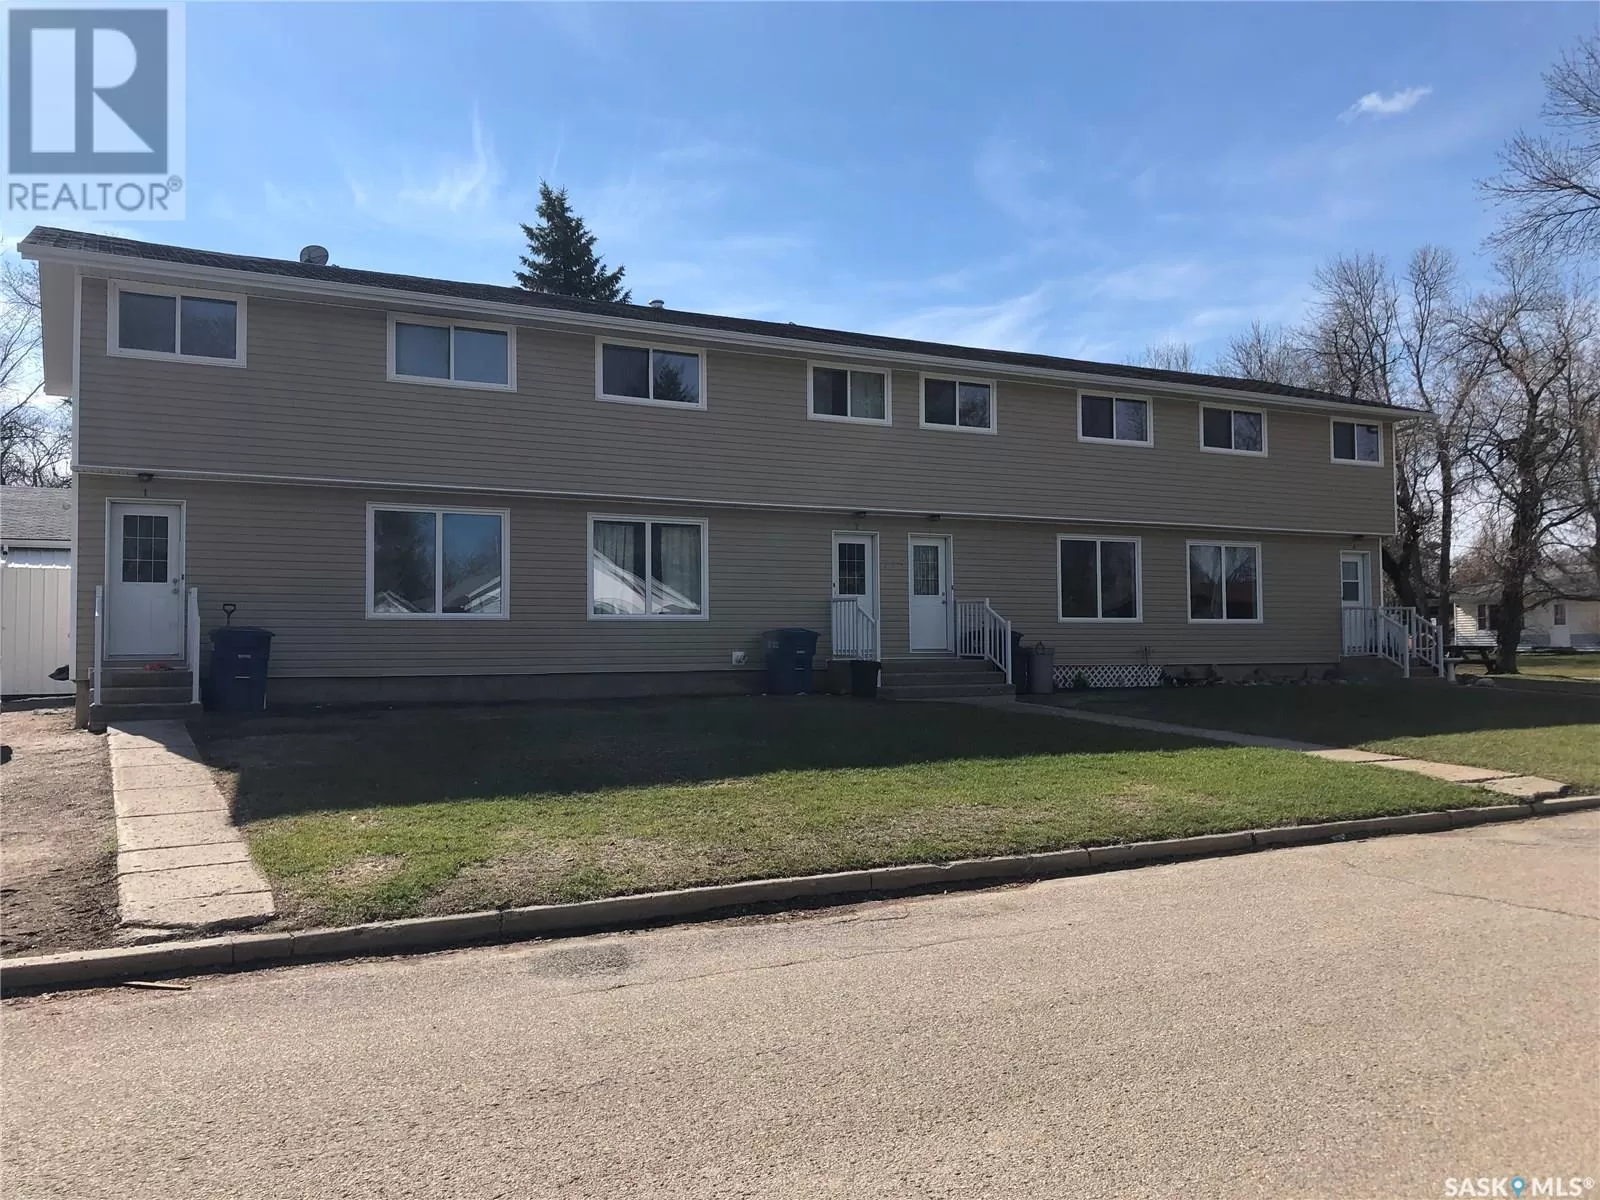 Fourplex for rent: 1202 Windover Avenue, Moosomin, Saskatchewan S0G 3N0